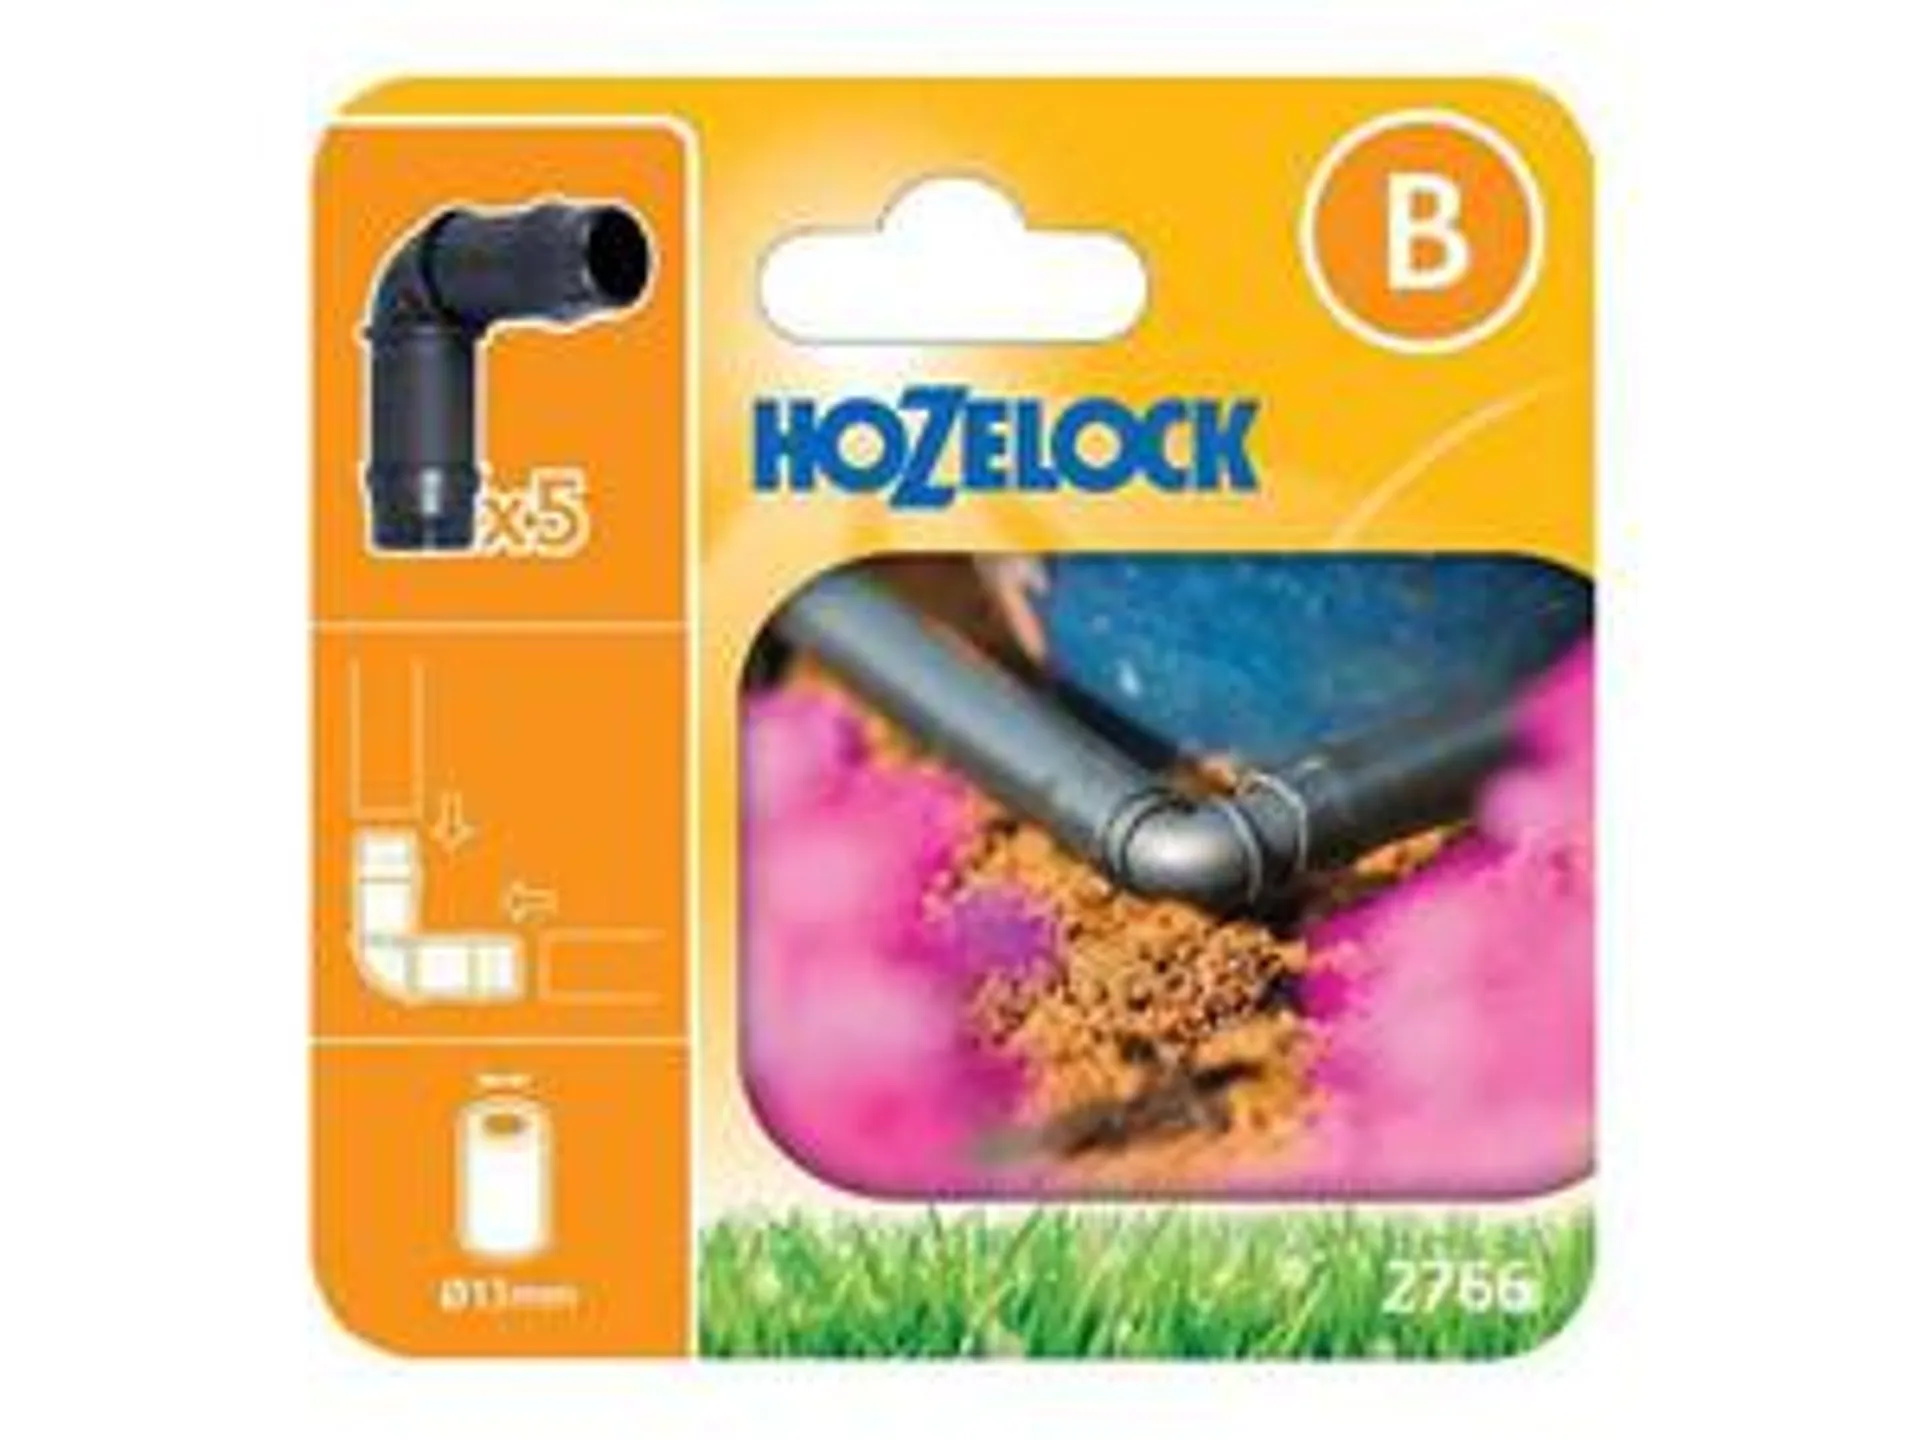 Hozelock 2766 90 Elbow Connector 13mm Pack 5 HOZ27660005